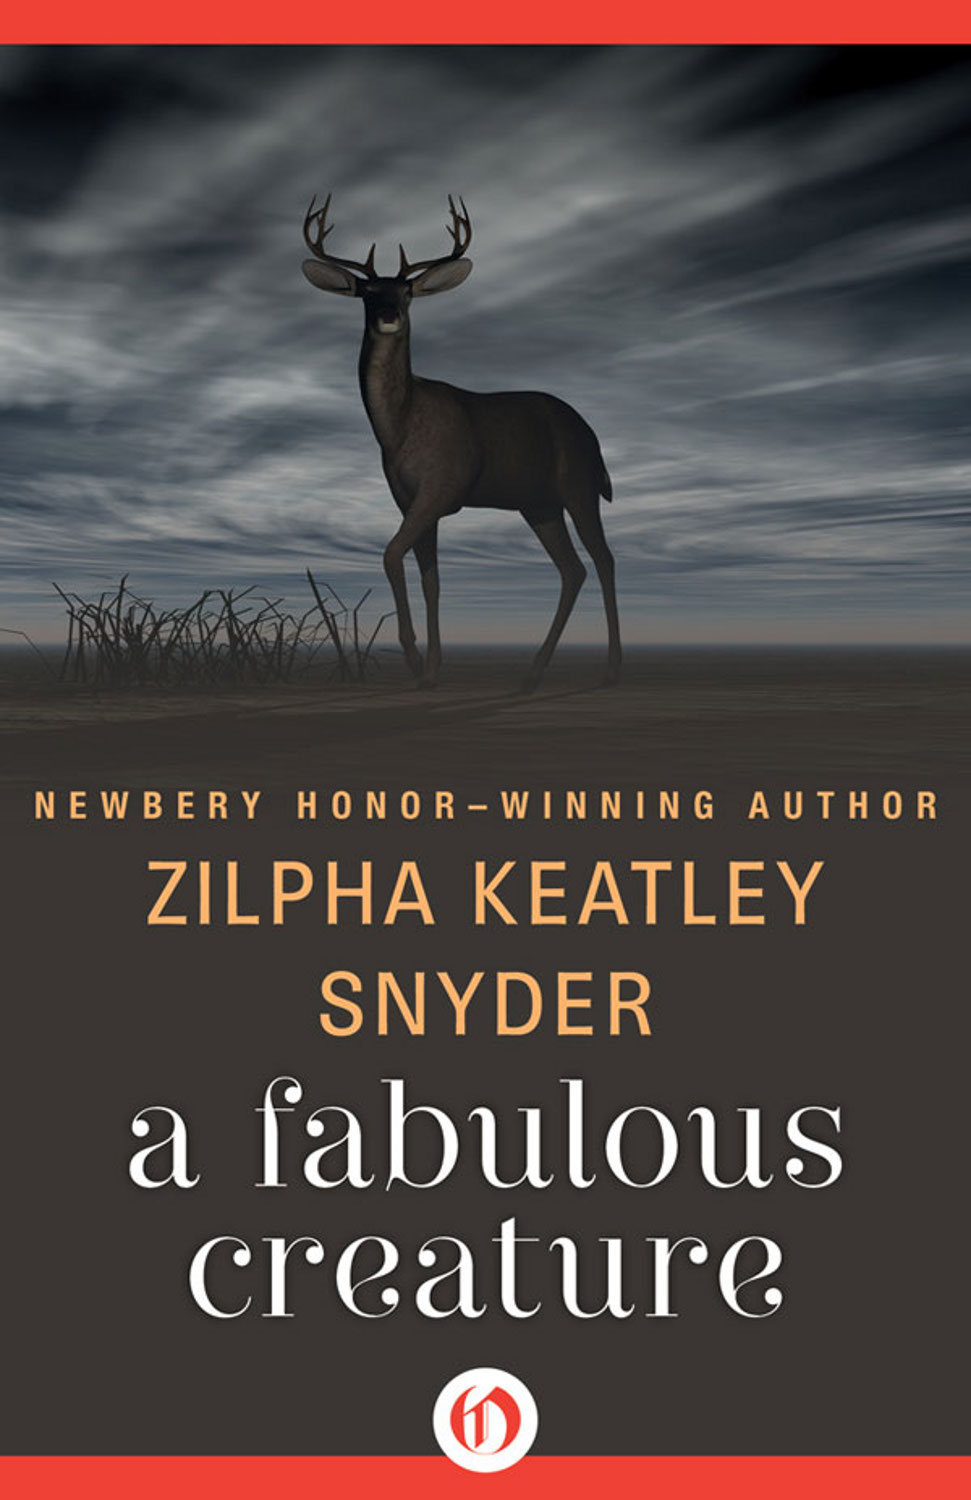 Fabulous Creature by Zilpha Keatley Snyder